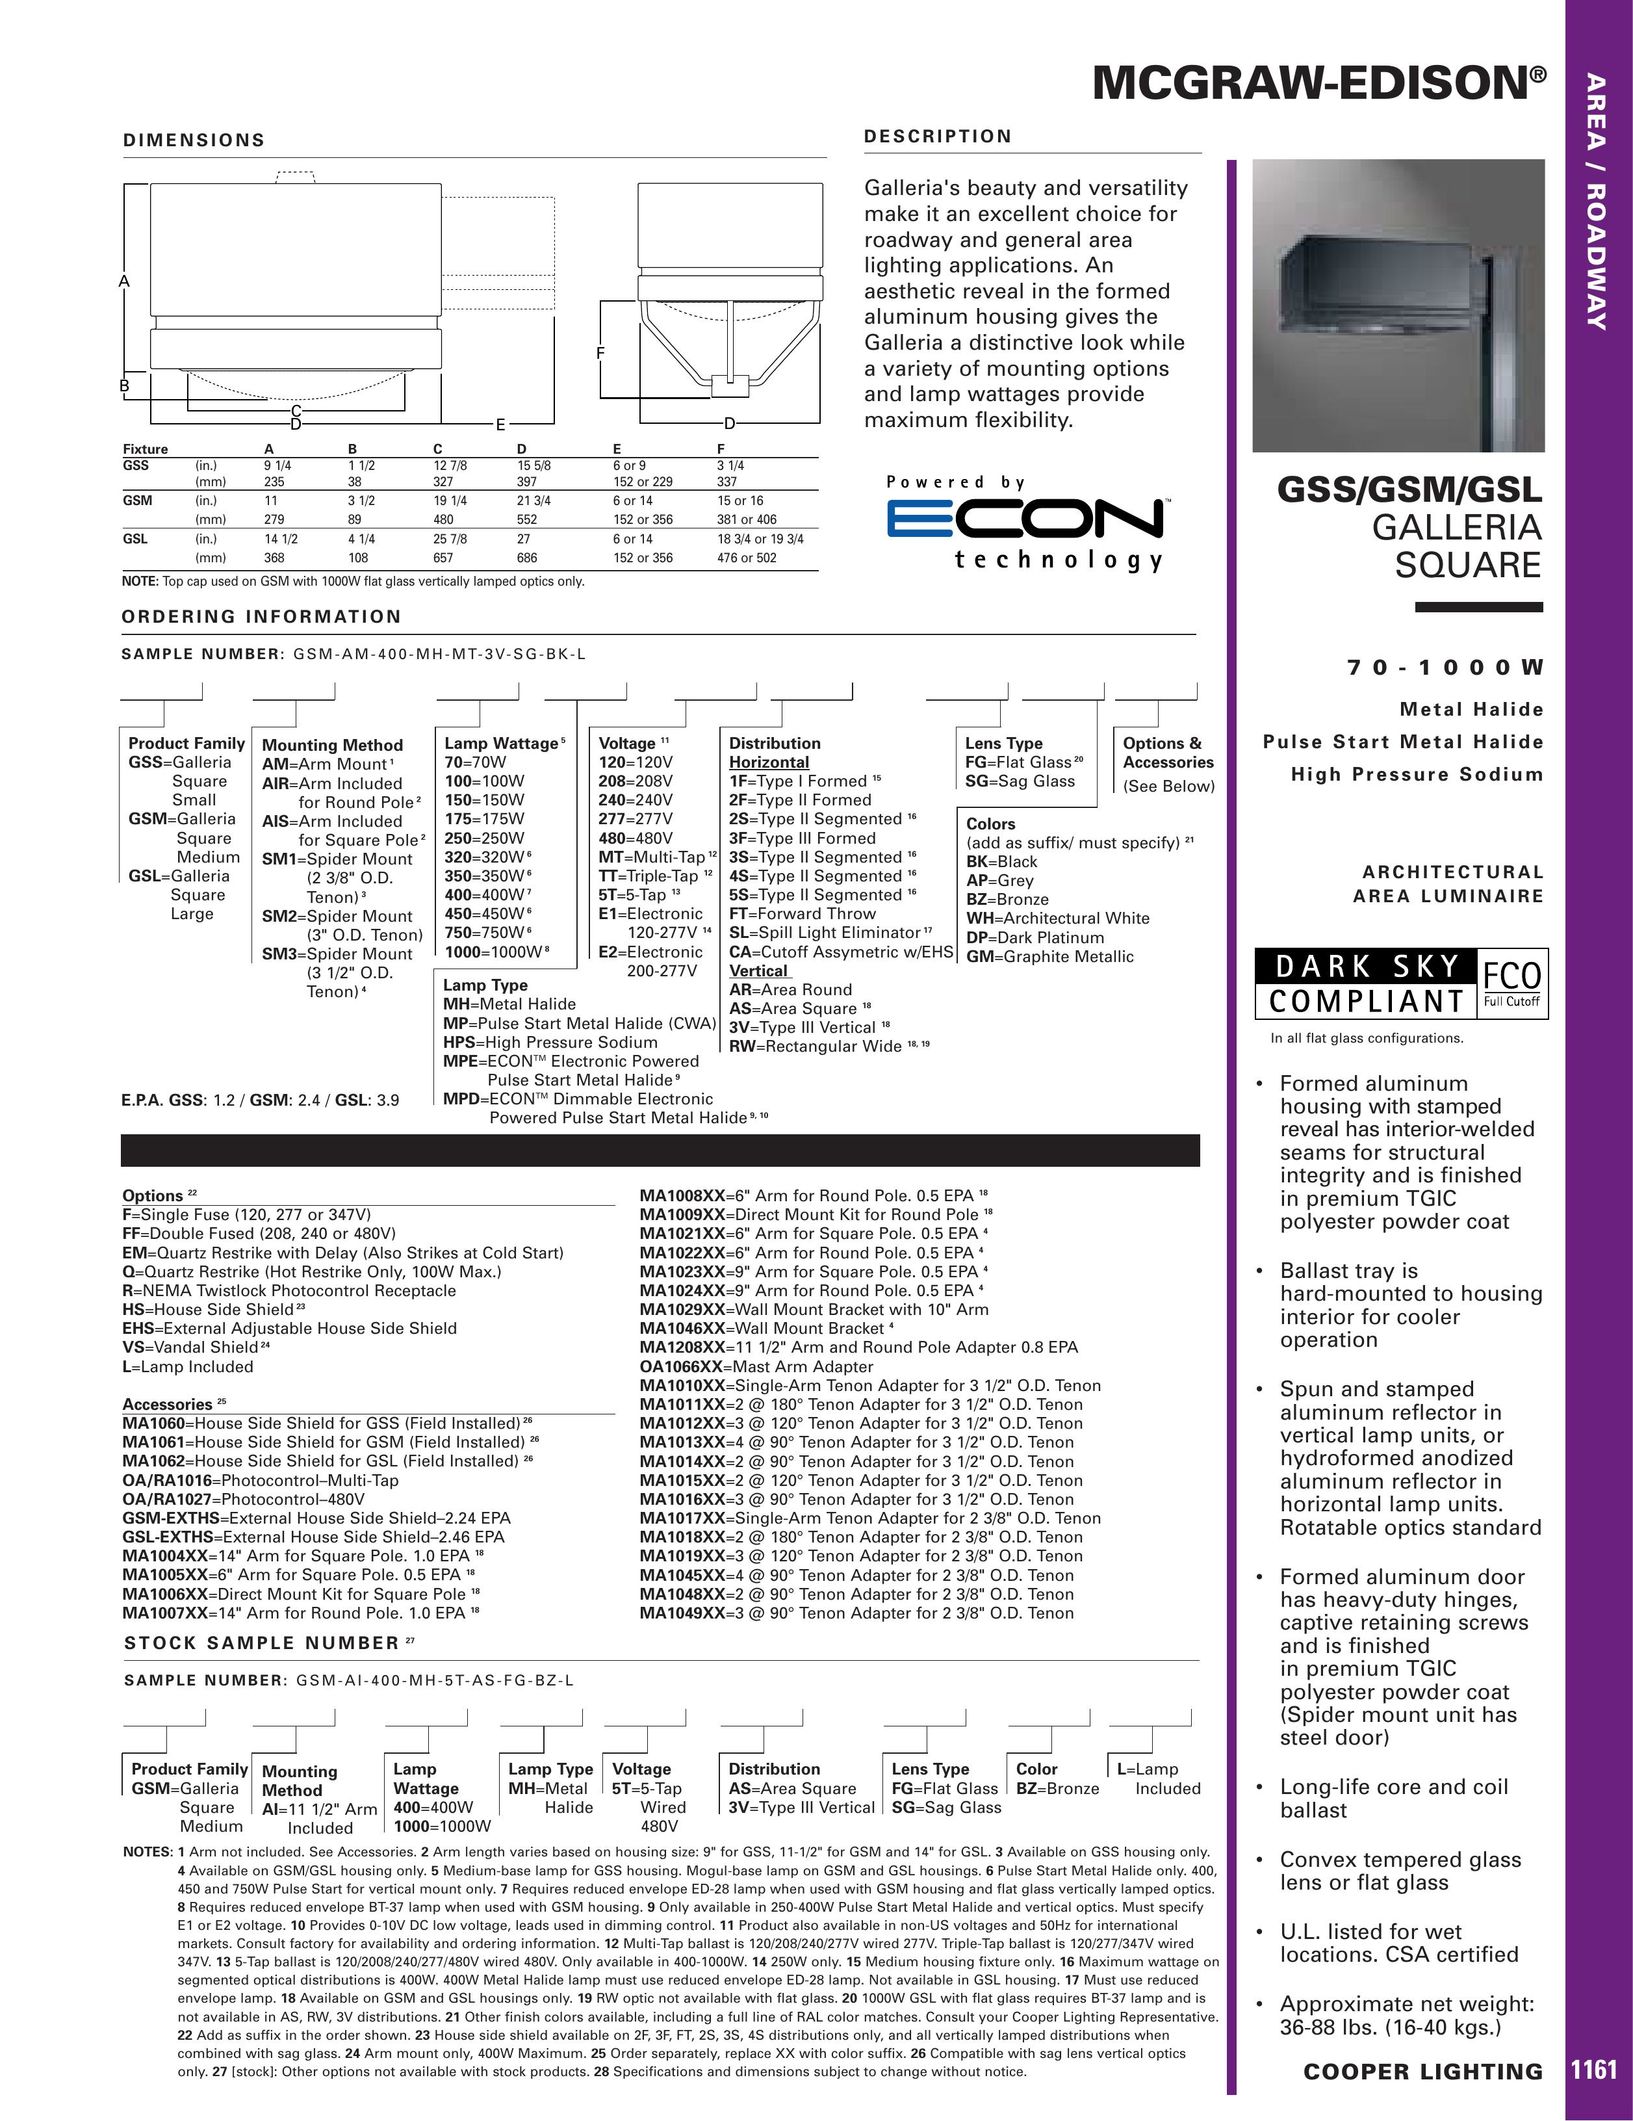 Cooper Lighting 1161 Indoor Furnishings User Manual